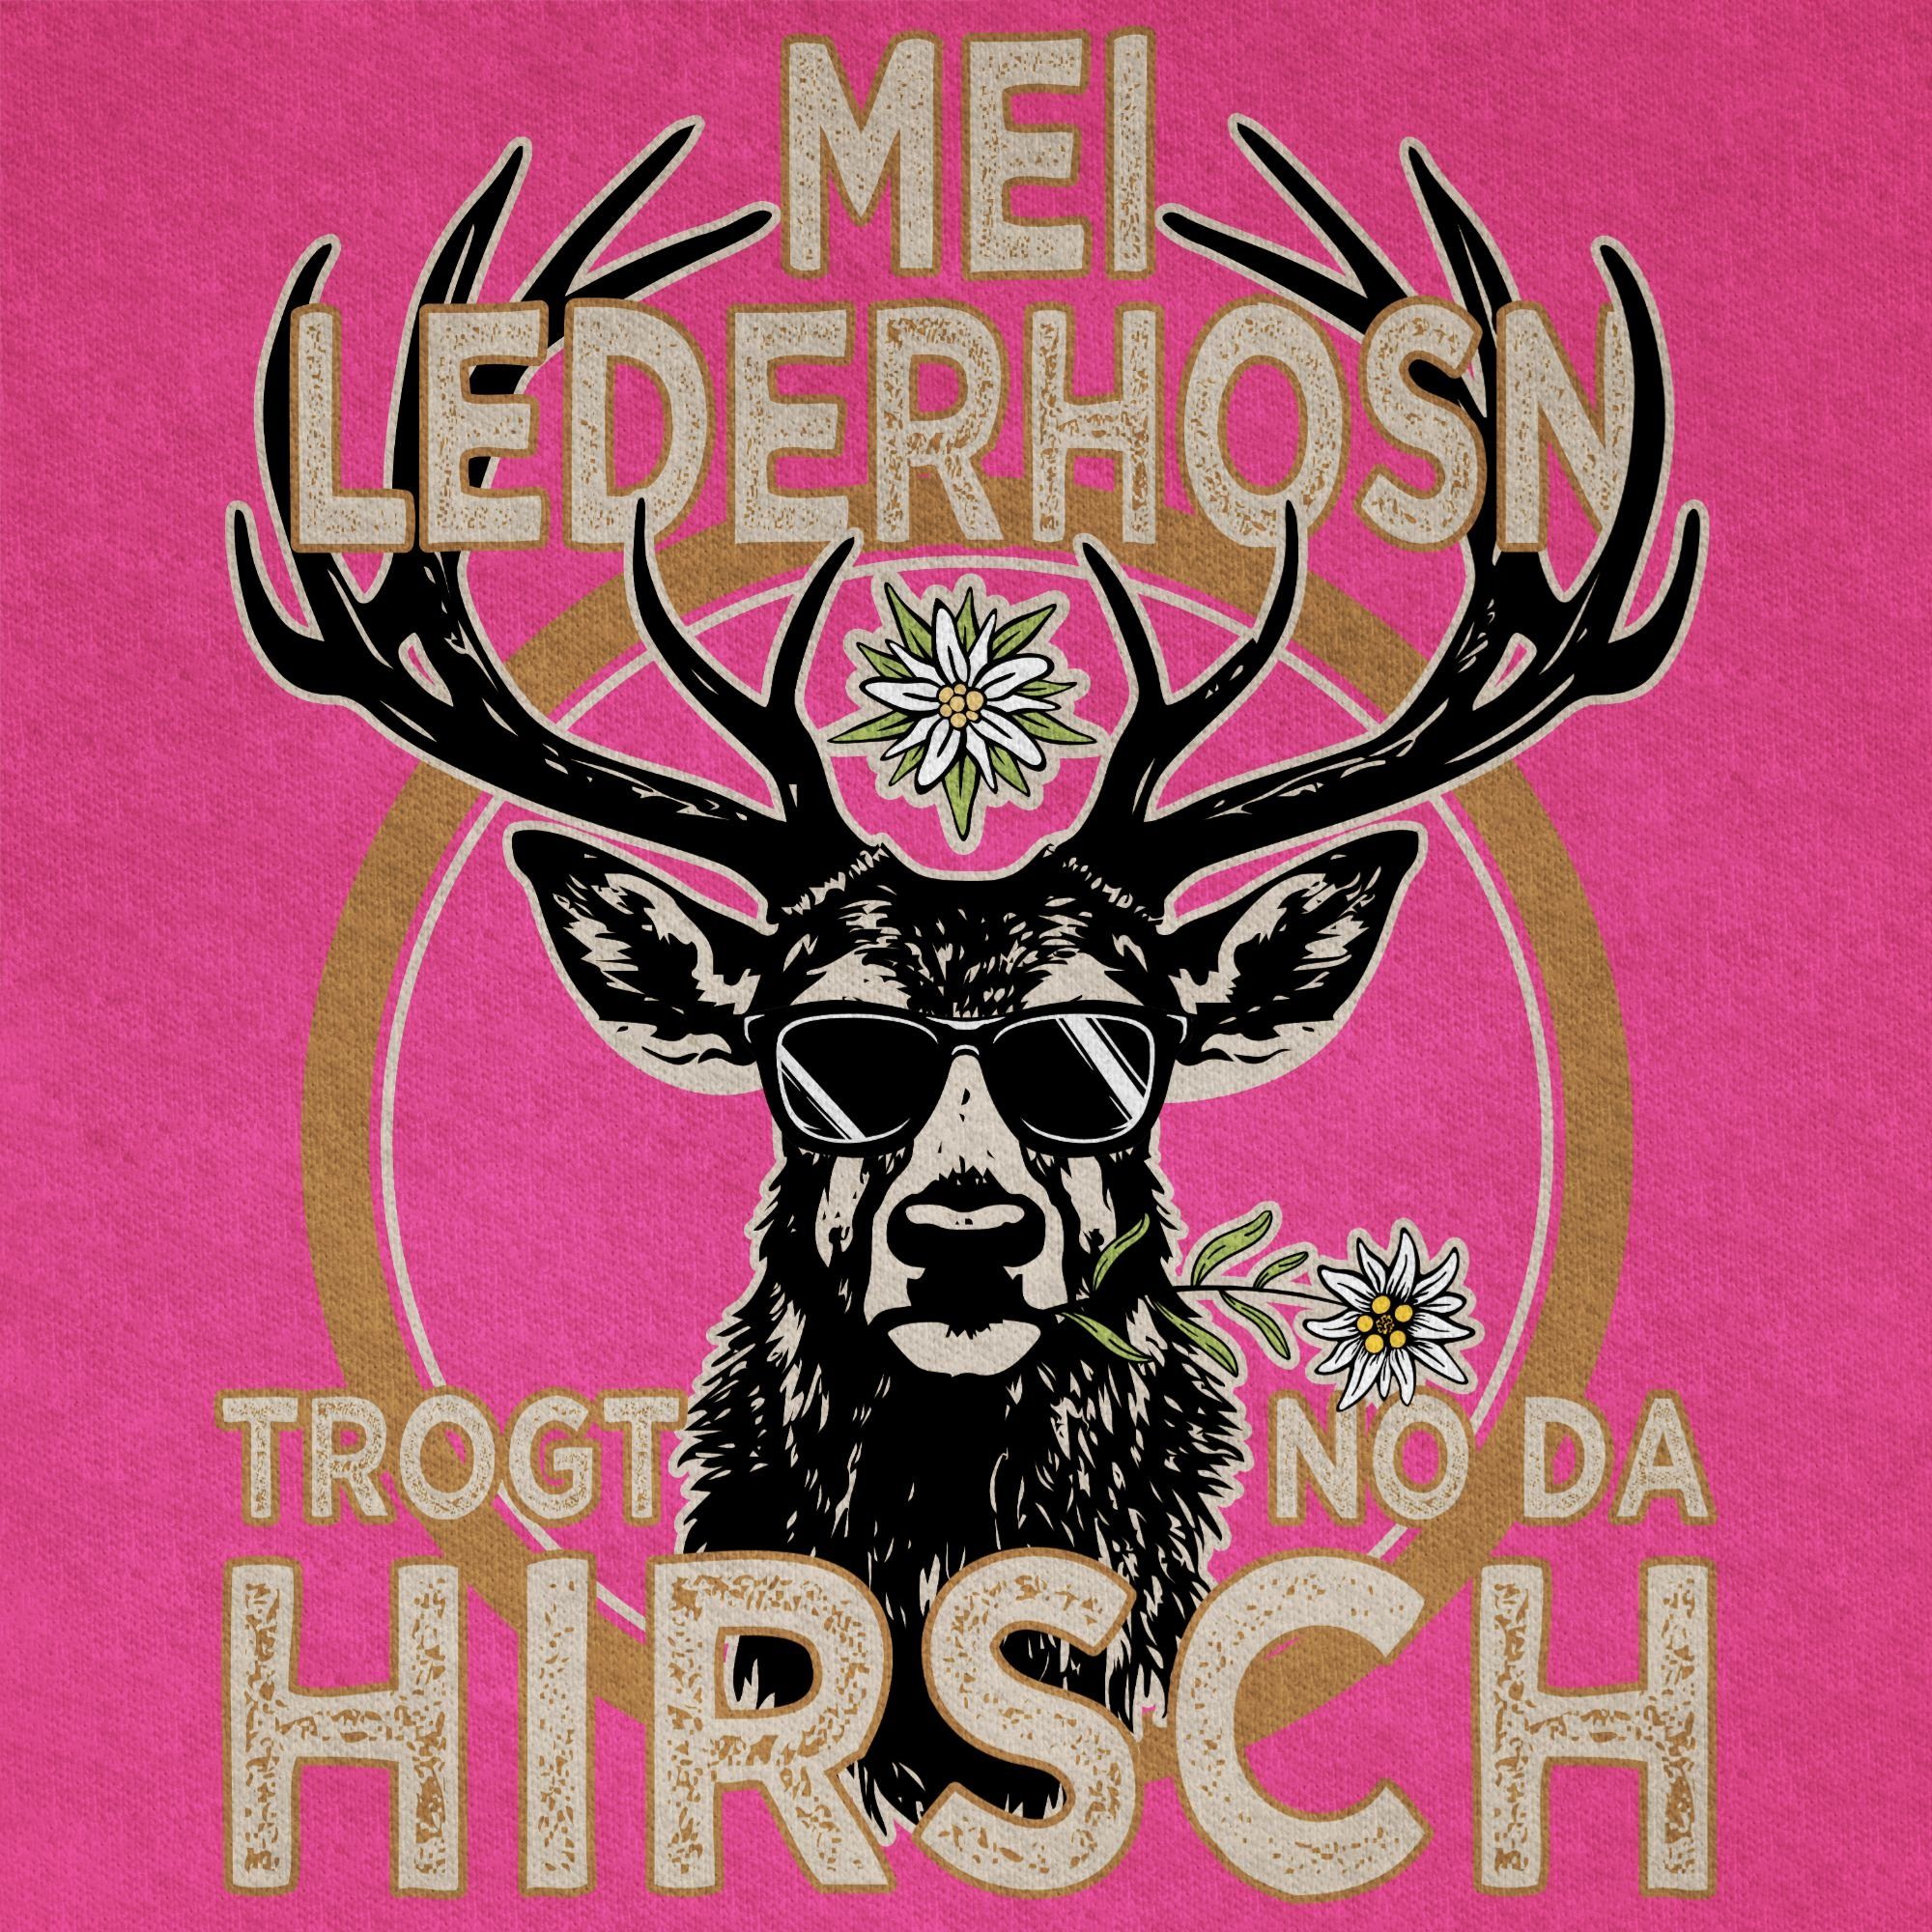 Lederhose Outfit 03 T-Shirt Spruch Hirsch für Kinder Trachten der Trägt Fuchsia Oktoberfest Shirtracer Outfit Mode